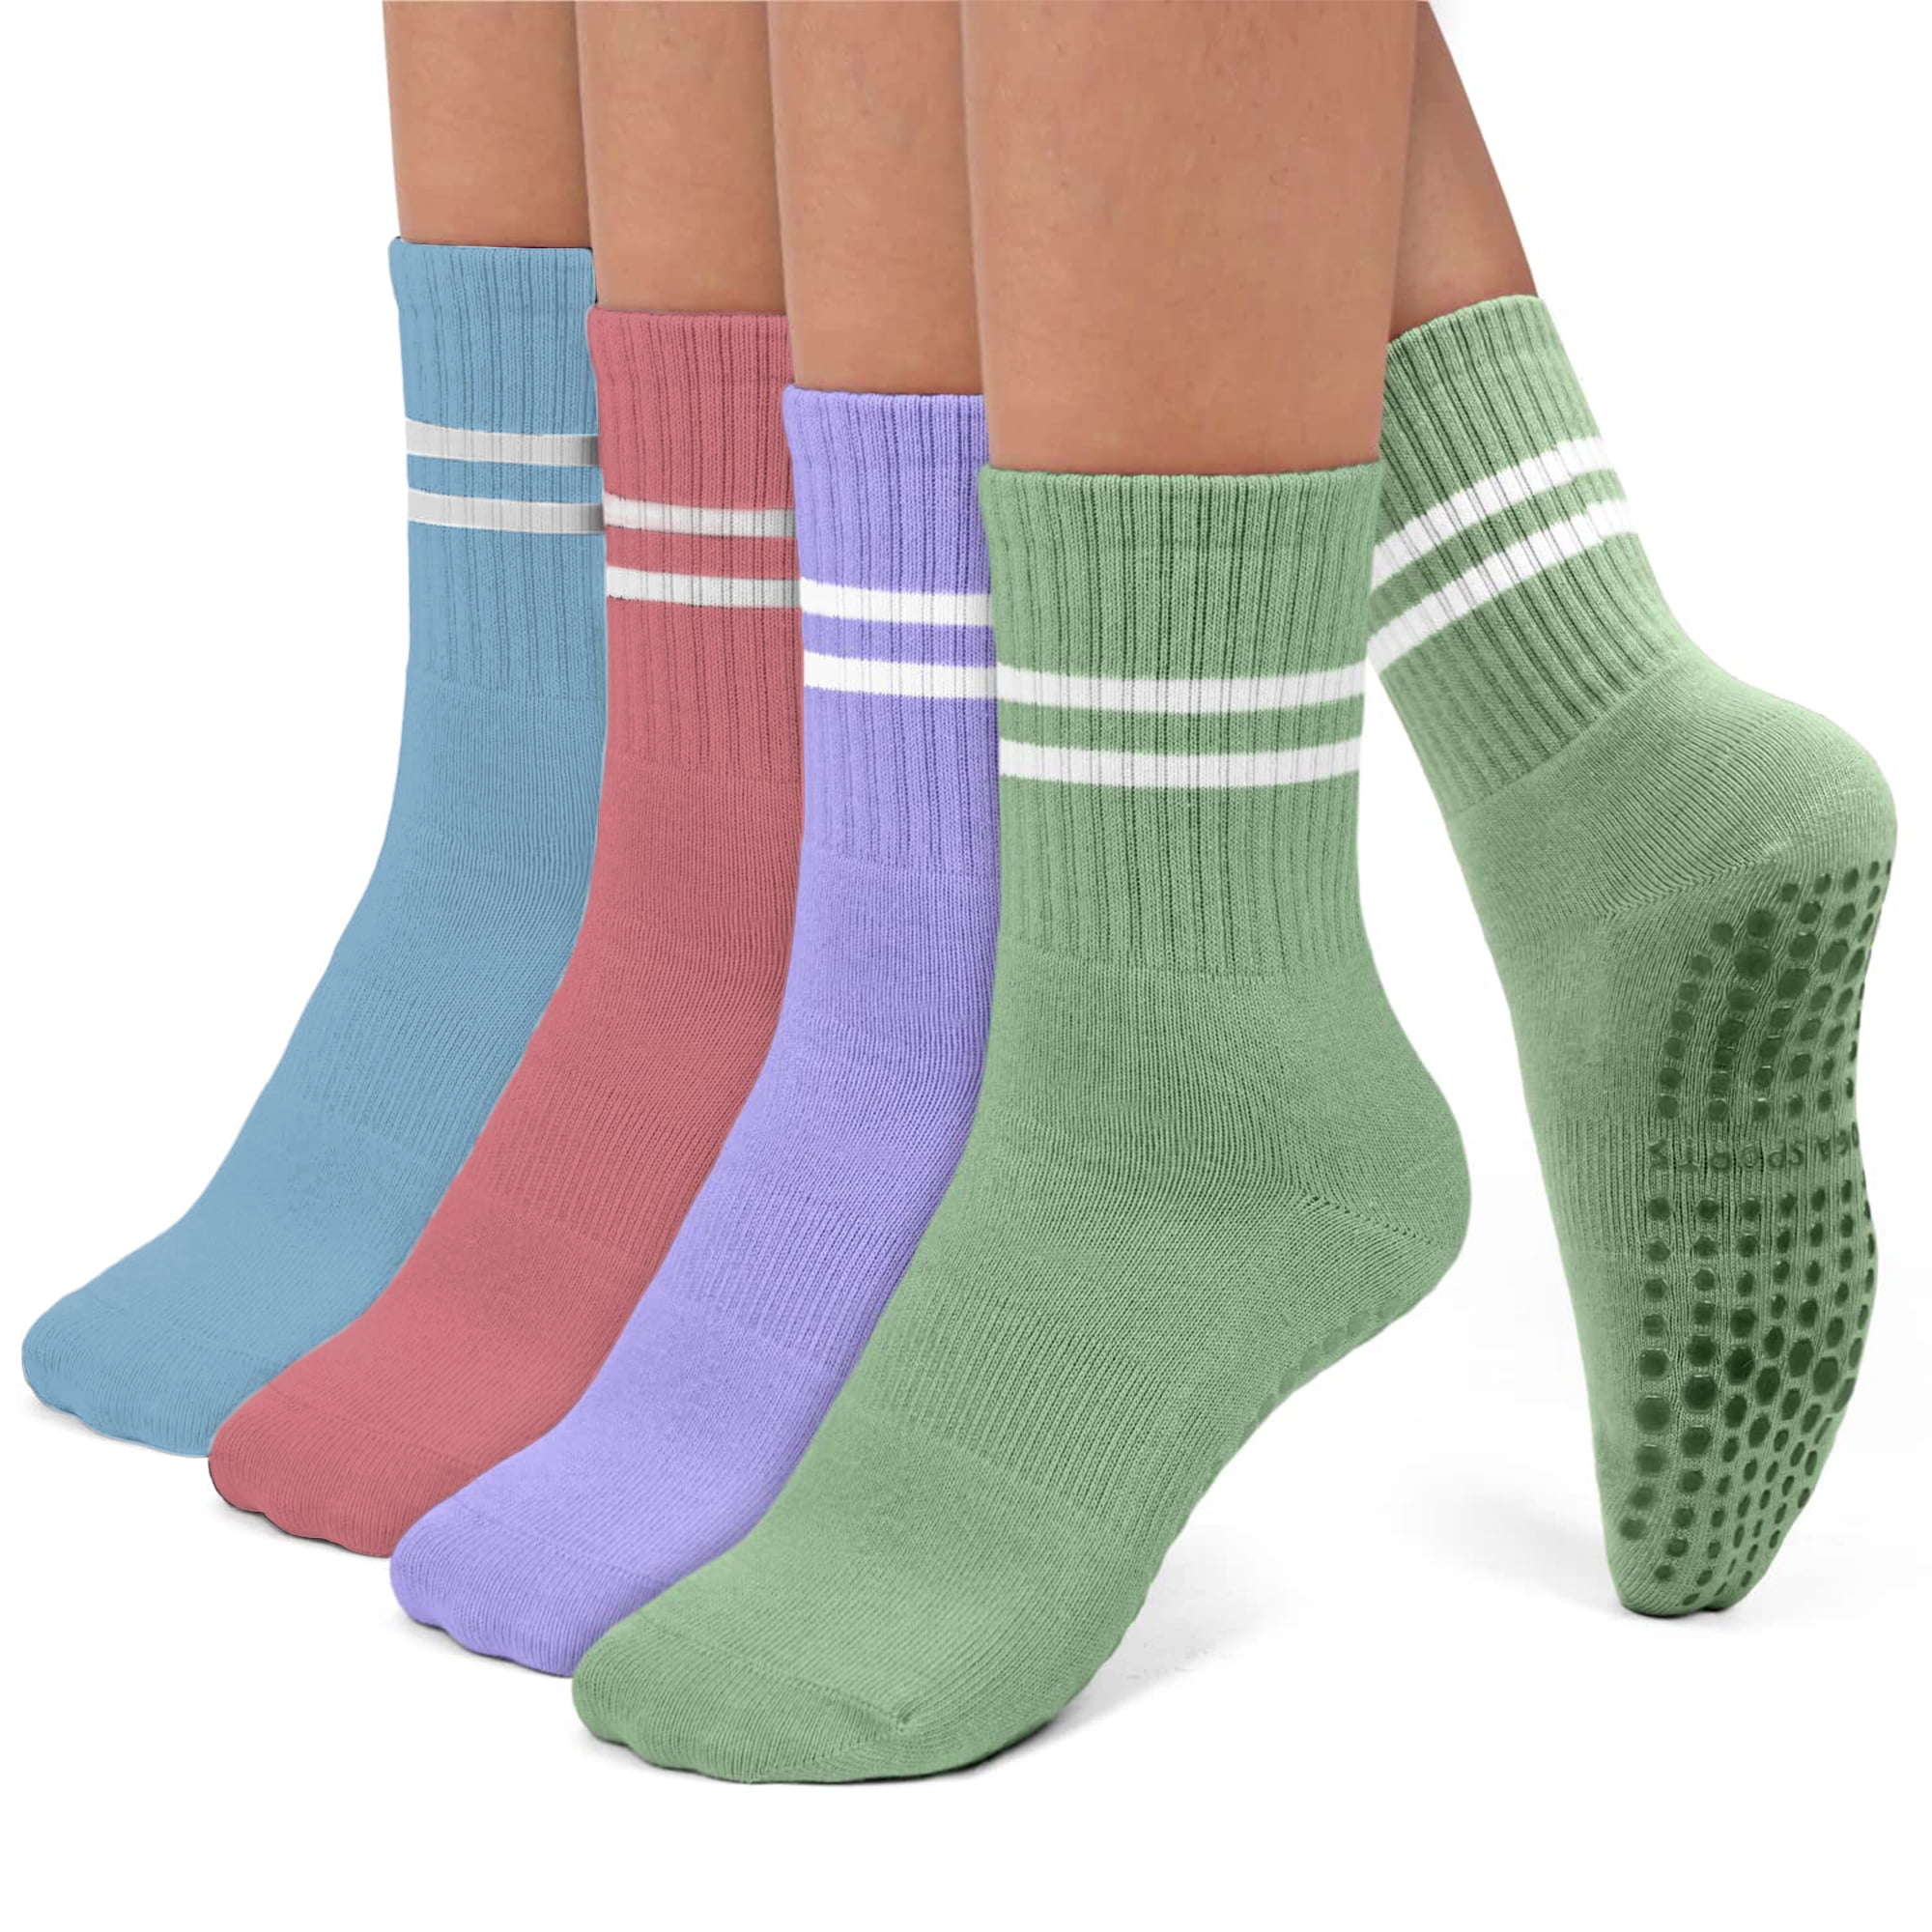 Yoga Pivot Barre Socks Cotton Silicone Non-slip Women High Quality